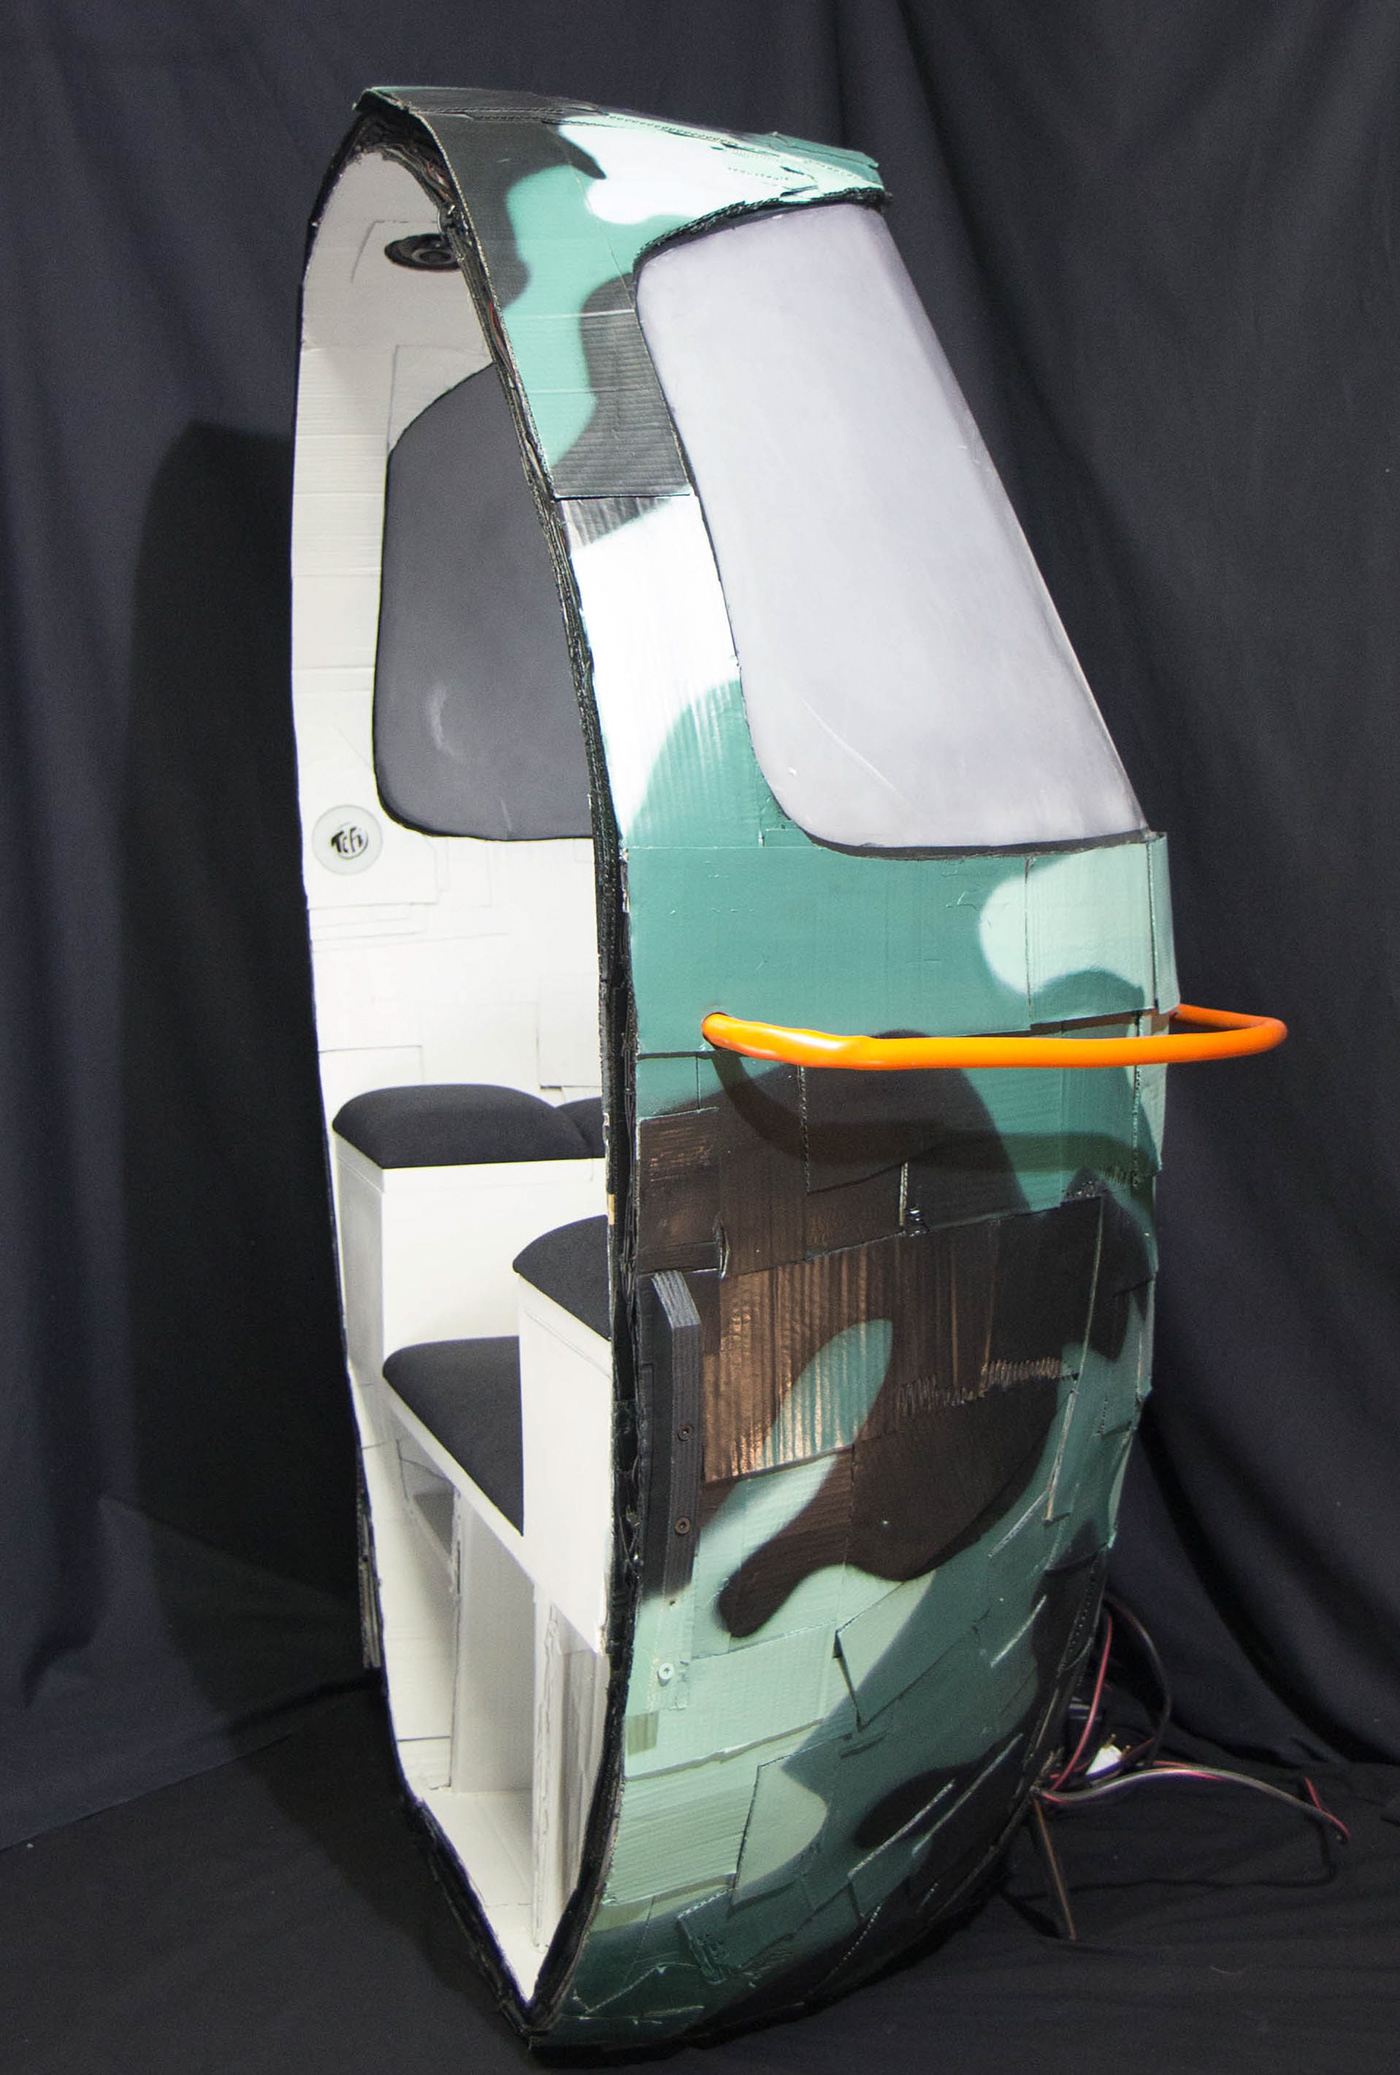 contemporarychair chair cardboardart camo camouflage Ski snowboard chaletdesign homedesign skiliftart